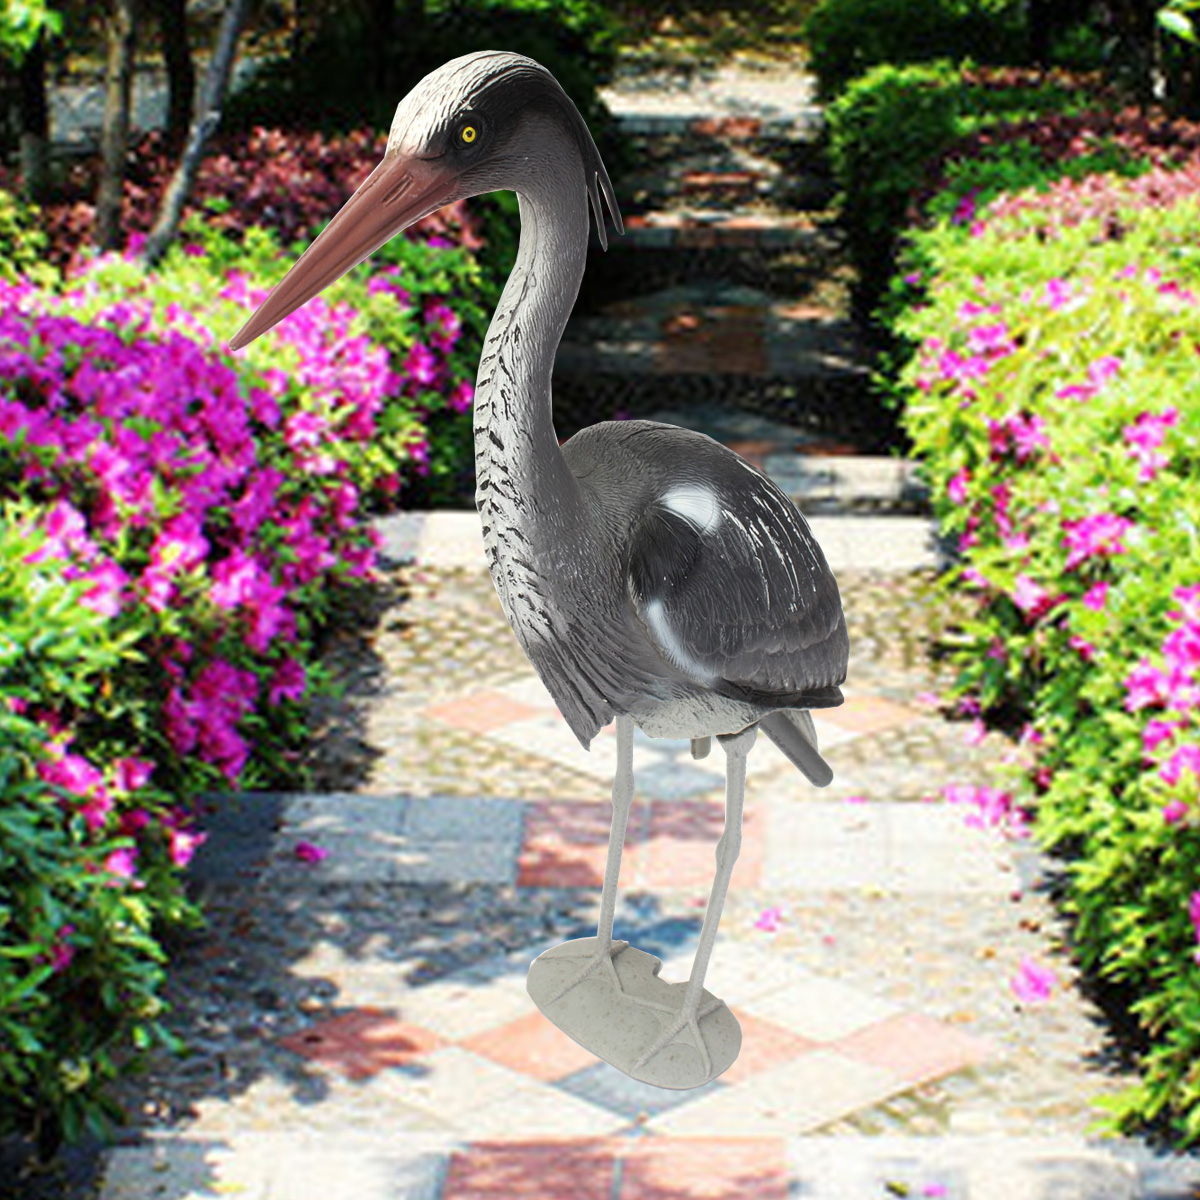 Large-Plastic-Resin-Decoy-Heron-Garden-Decorations-Bird-Scarer-Fish-Pond-Koi--Decorations-1001076-7